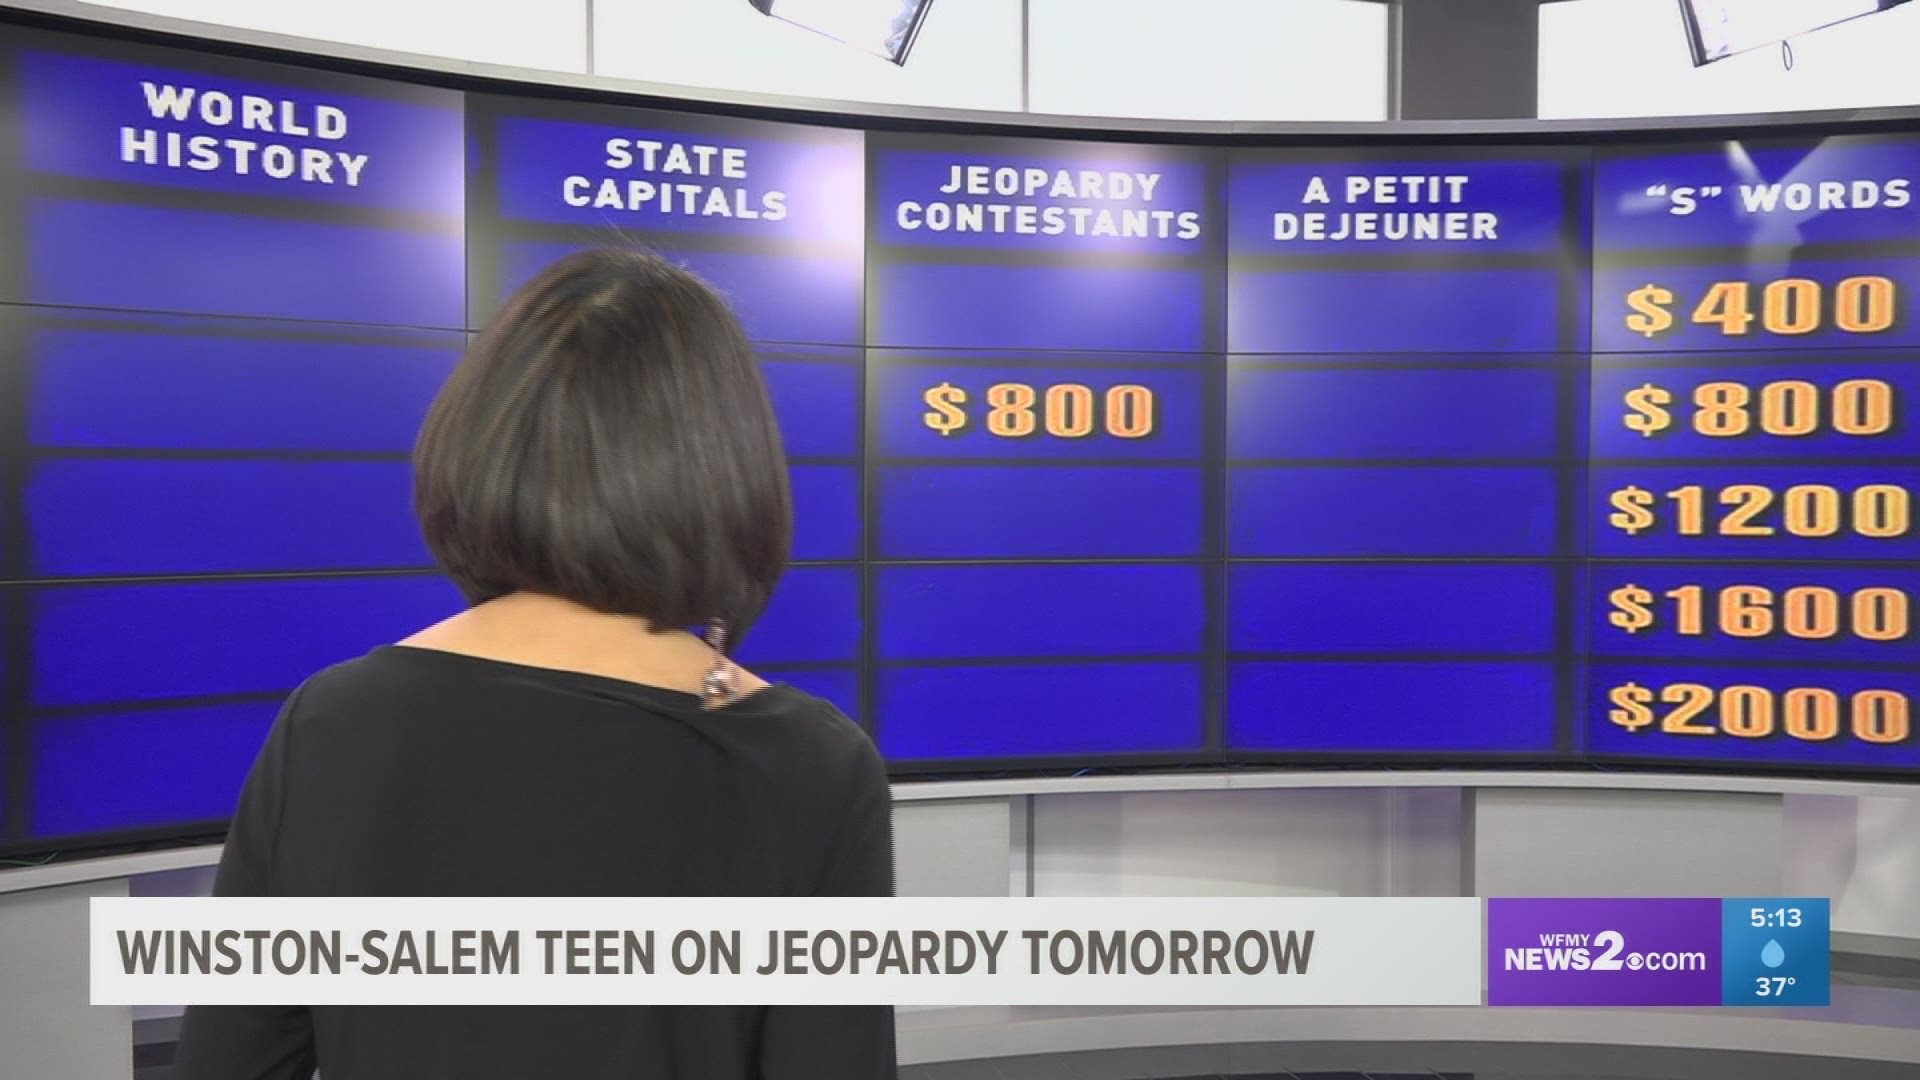 Rohan Kapileshwari from Winston-Salem will be on Teen Jeopardy Tuesday.